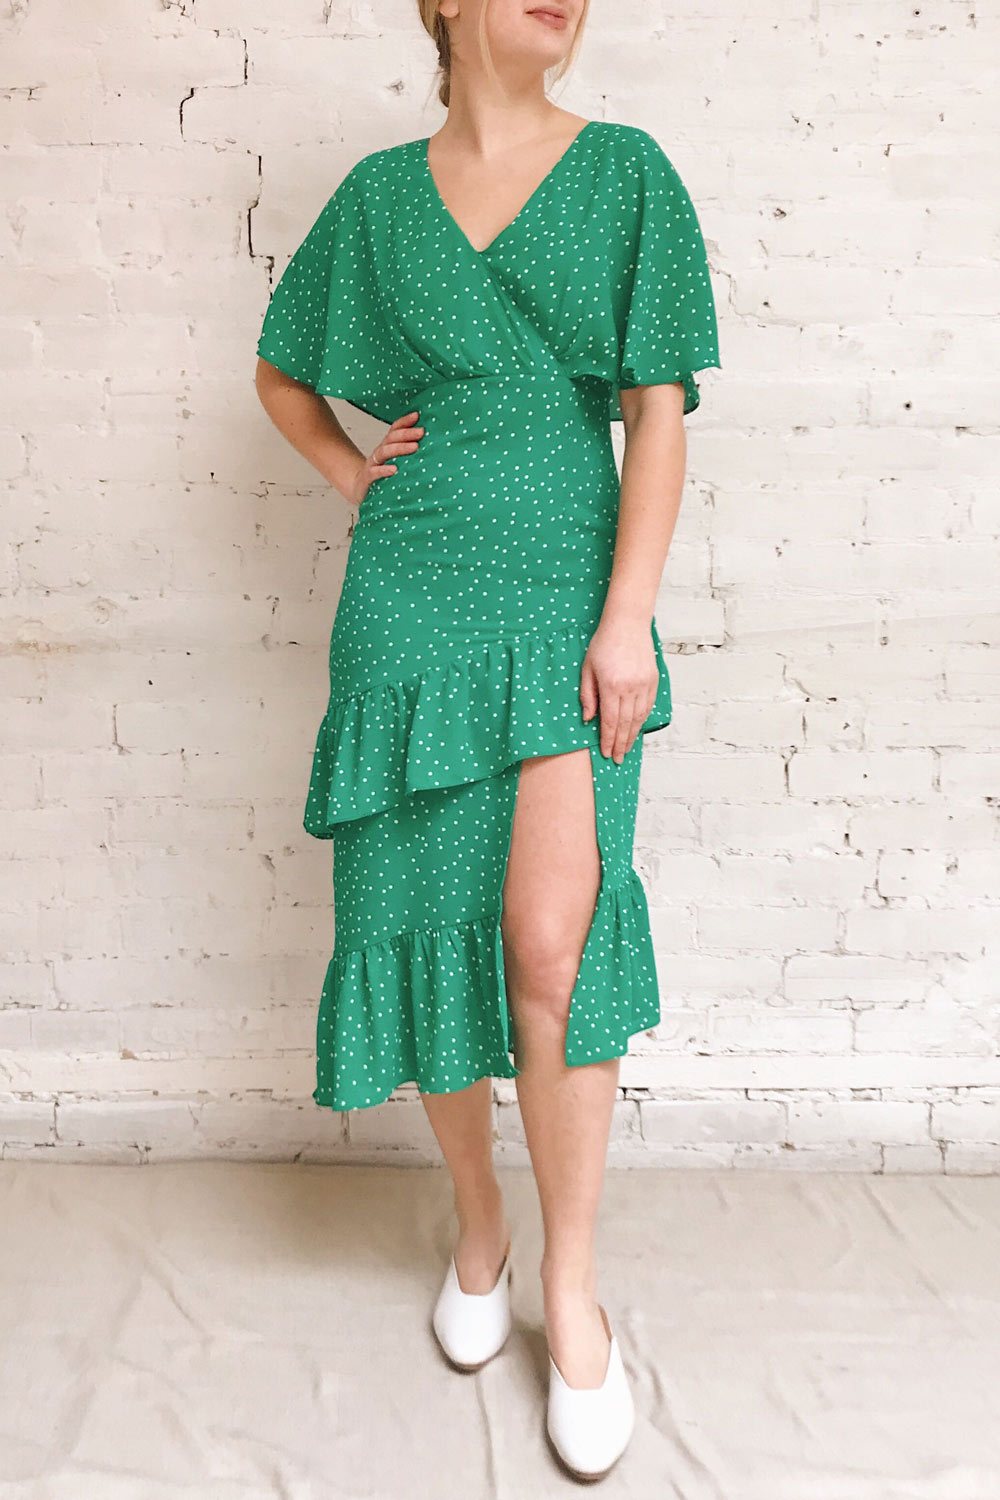 Ayelen Green Polka Dot Midi Dress w/ Frills | Boutique 1861 model look